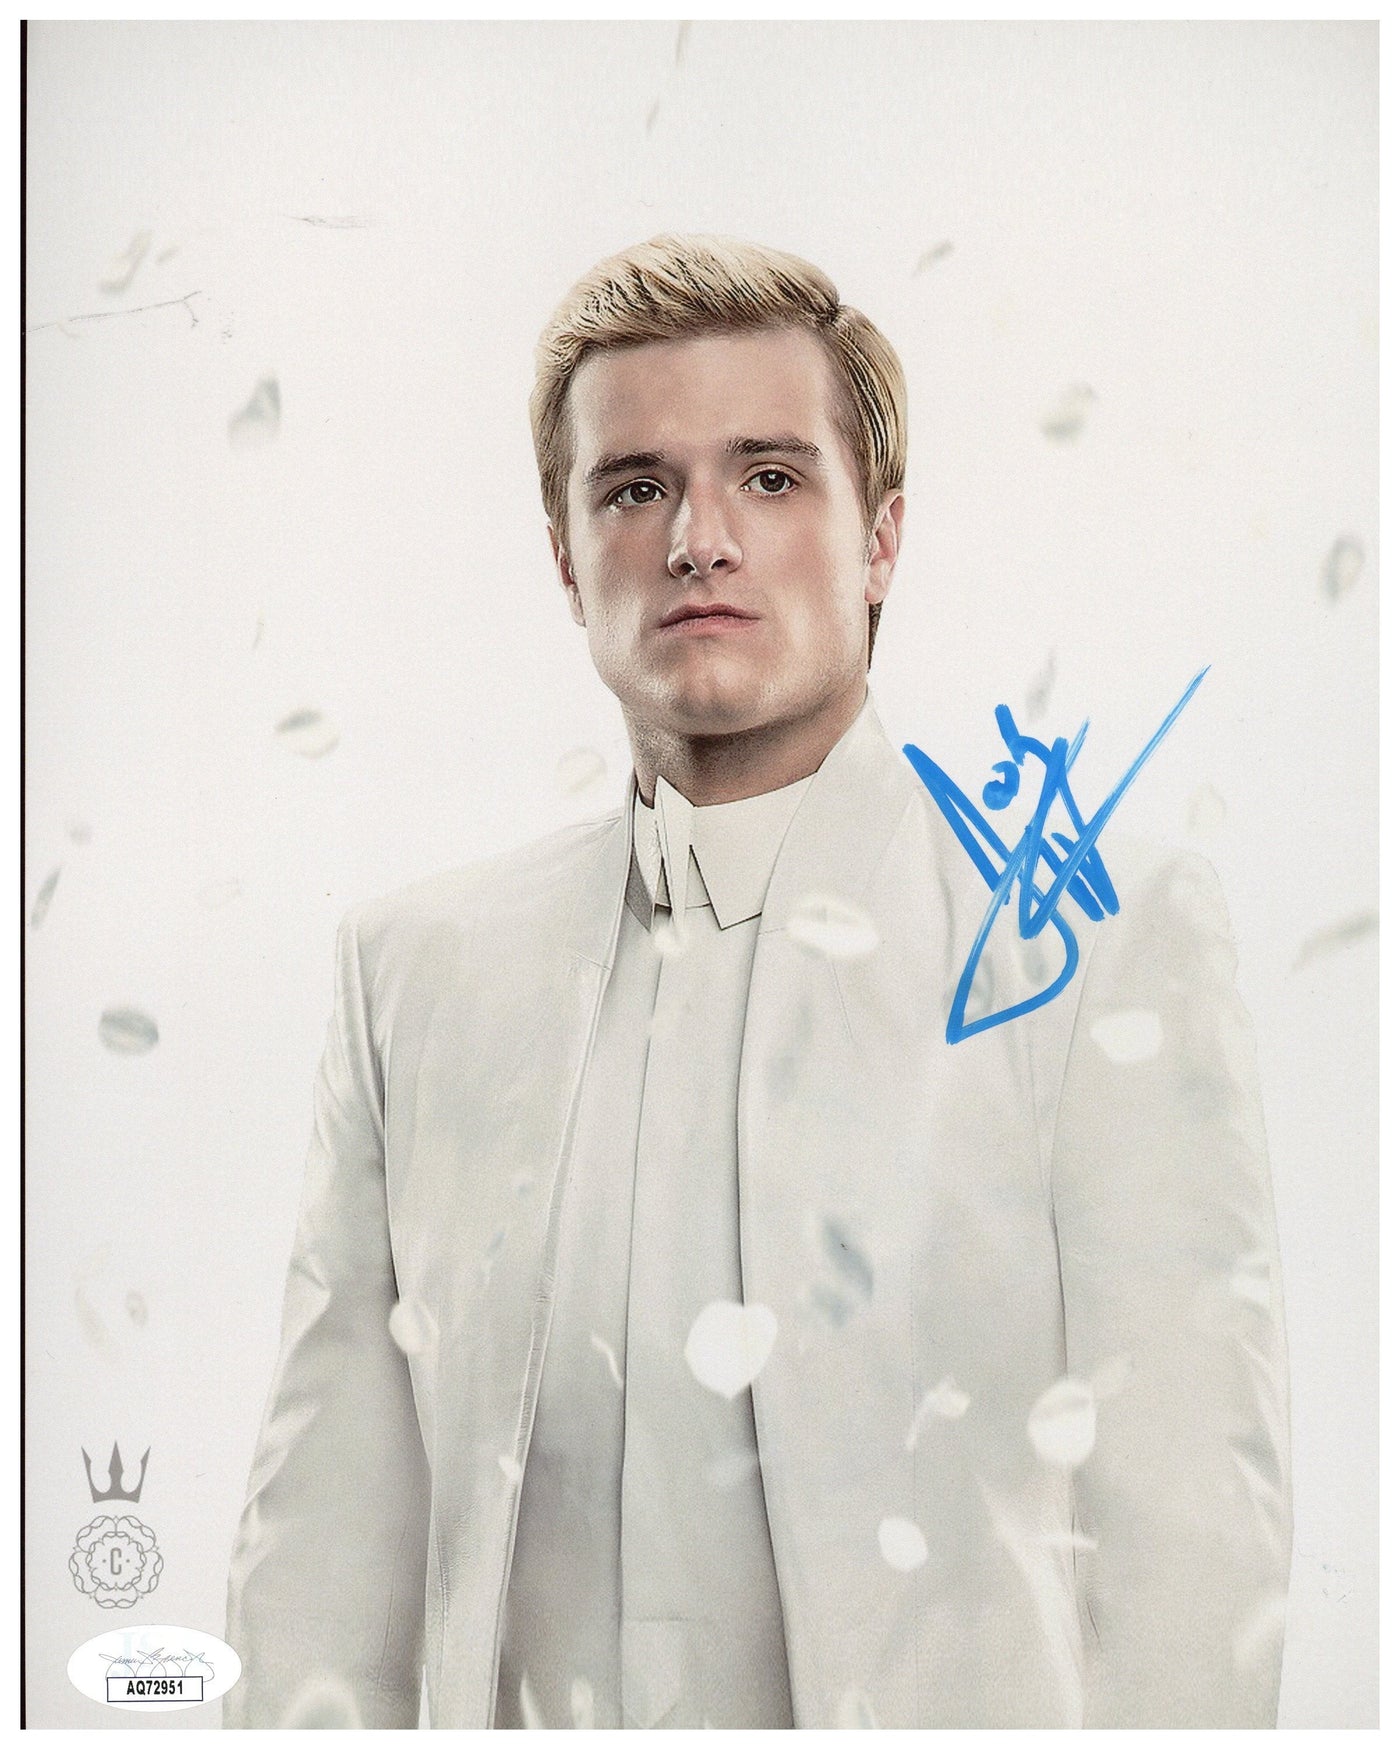 Josh Hutcherson Signed 8x10 Photo The Hunger Games Peeta Mellark Autographed JSA 3